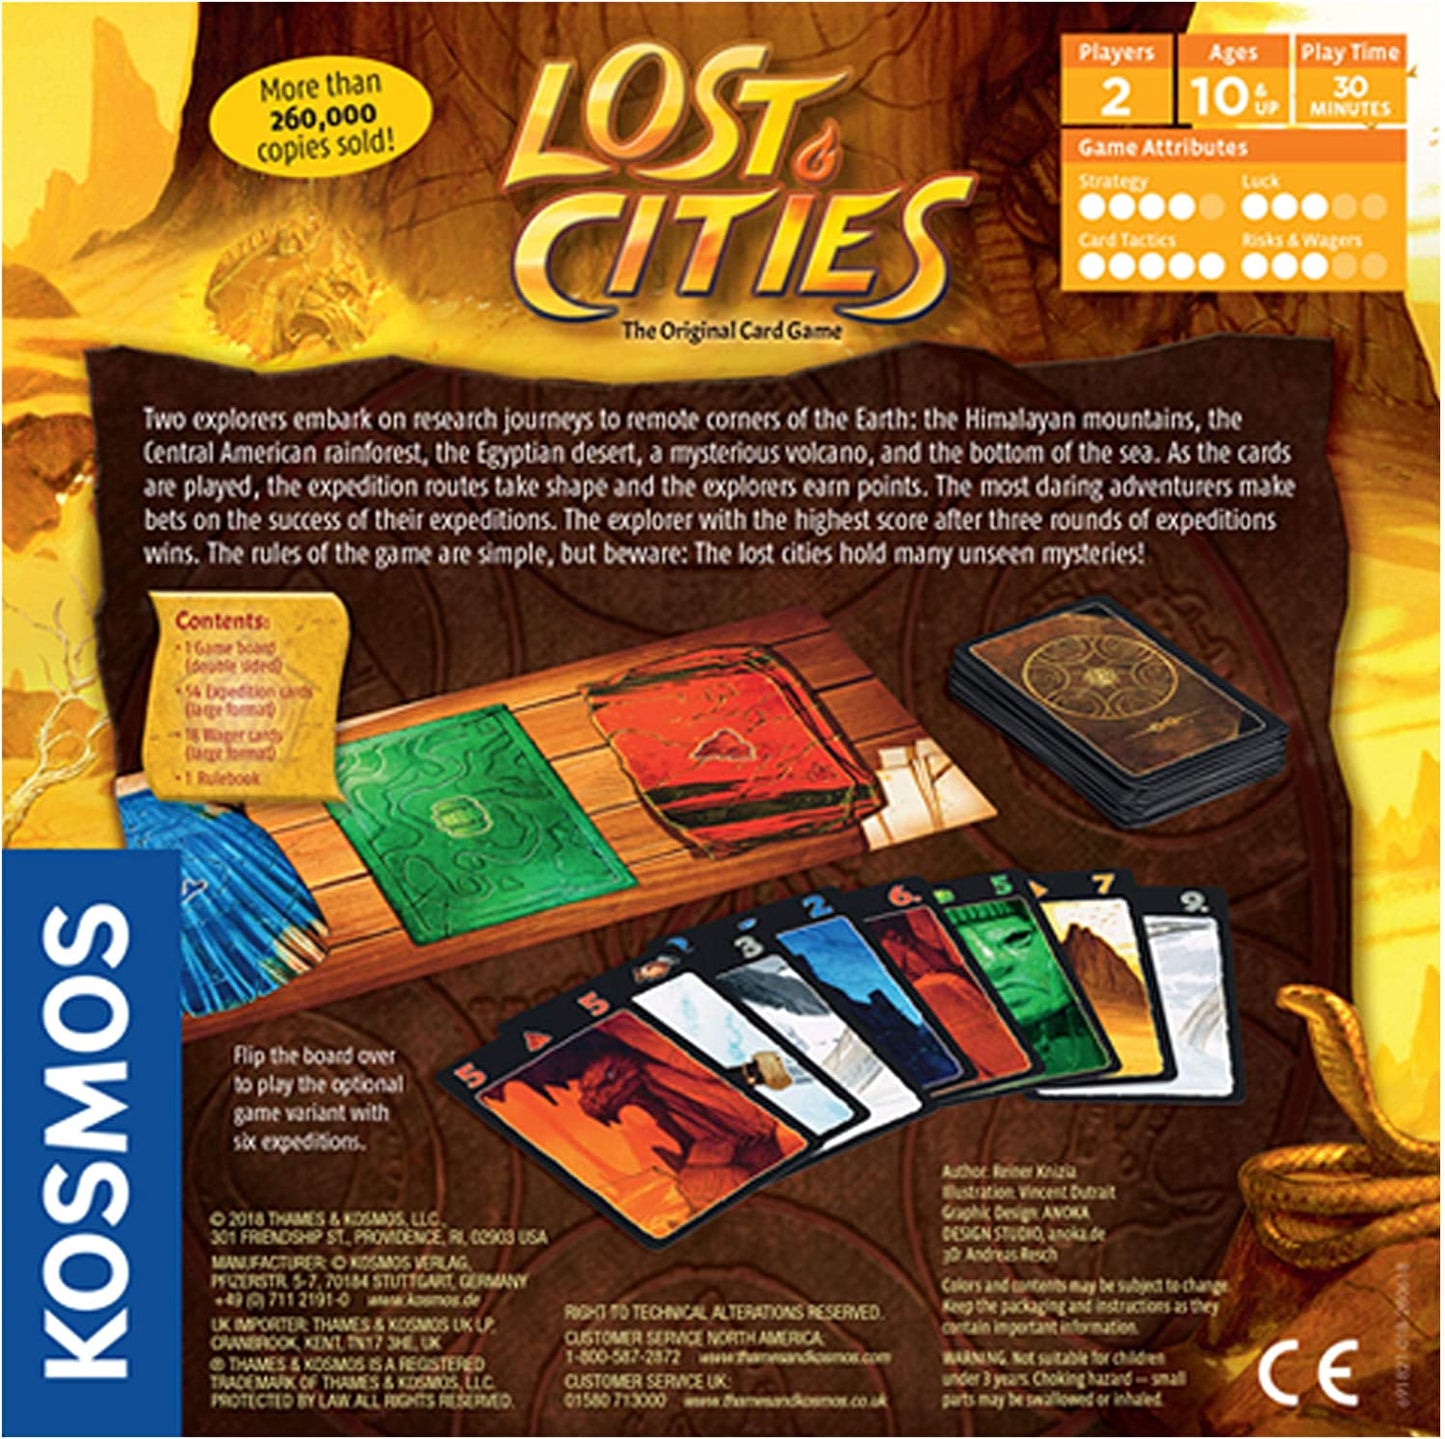 Lost Cities - The Original Card Game KOSMOS